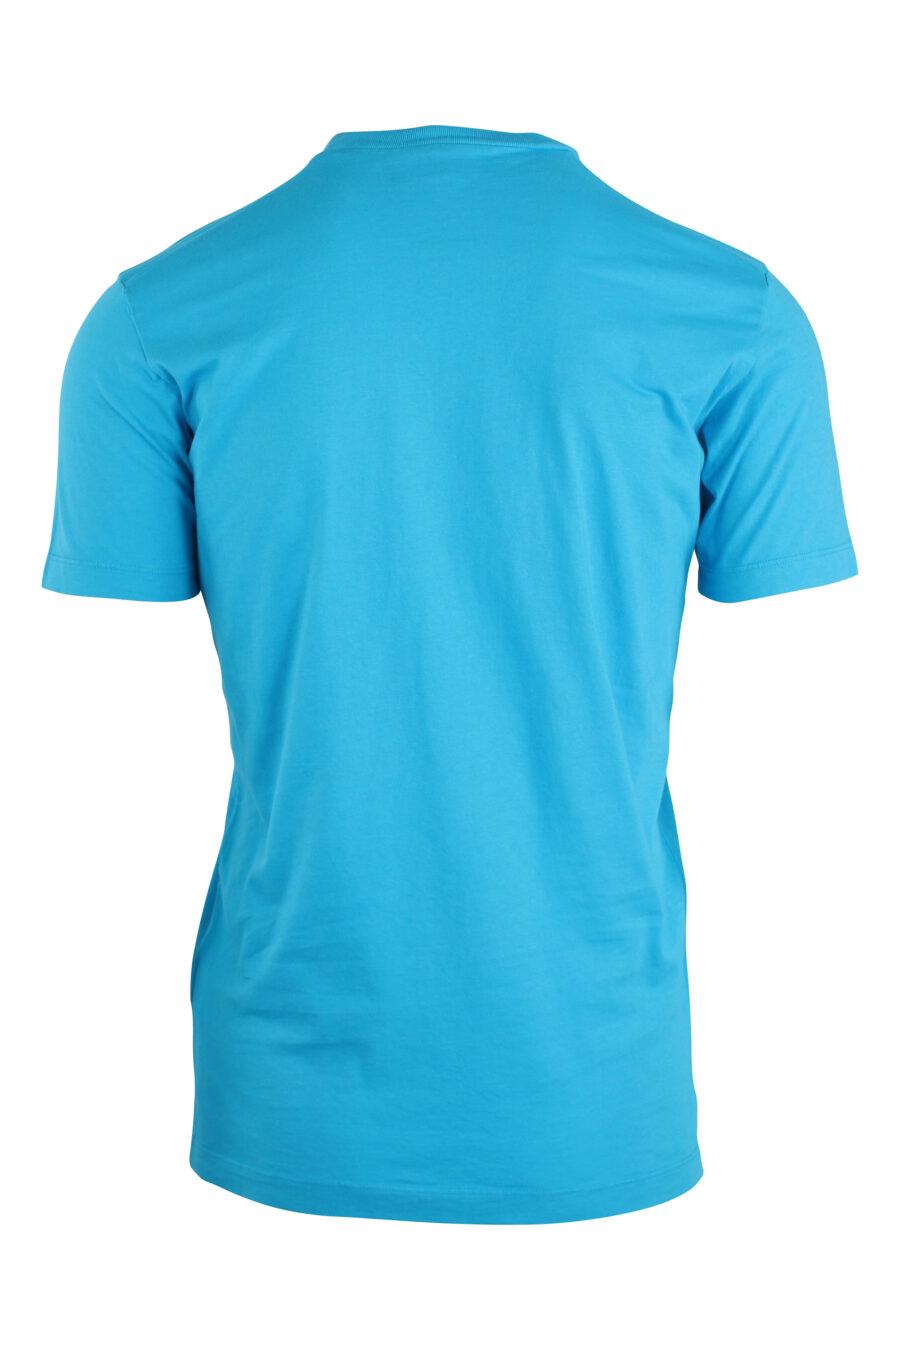 Light blue T-shirt with yellow maxilogue - IMG 8922